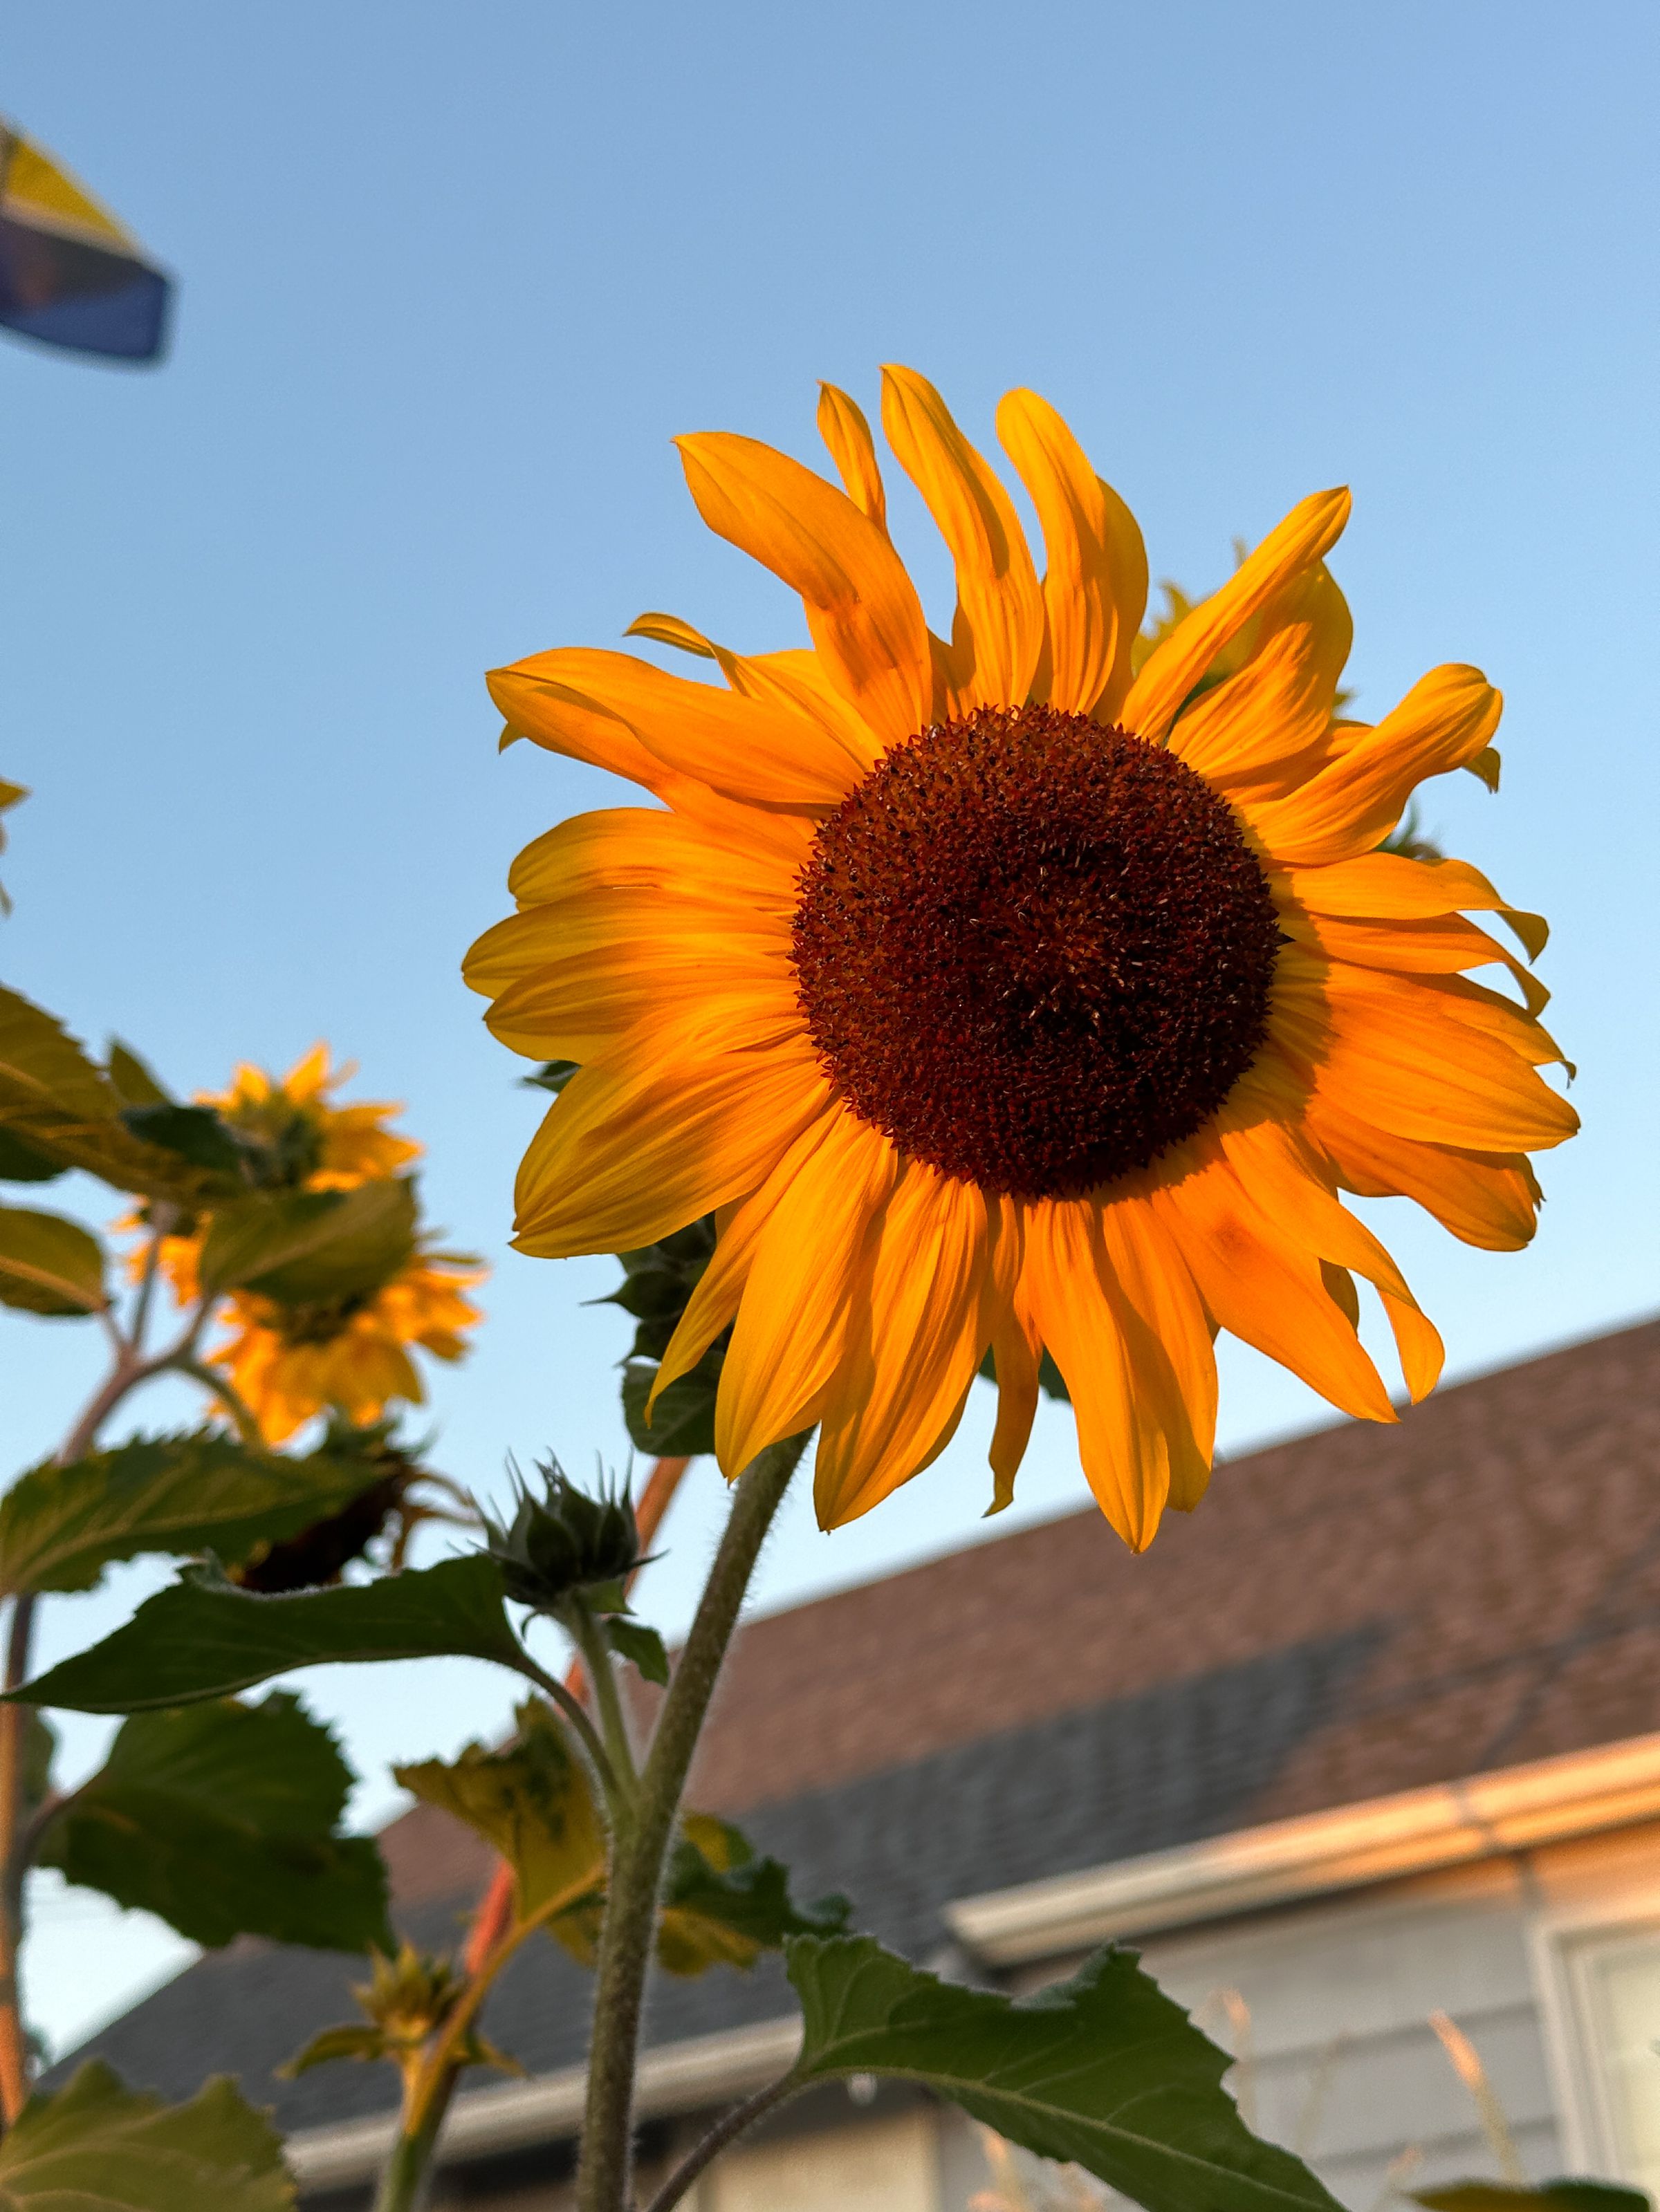 Sunflower against a blue sky at sunset.